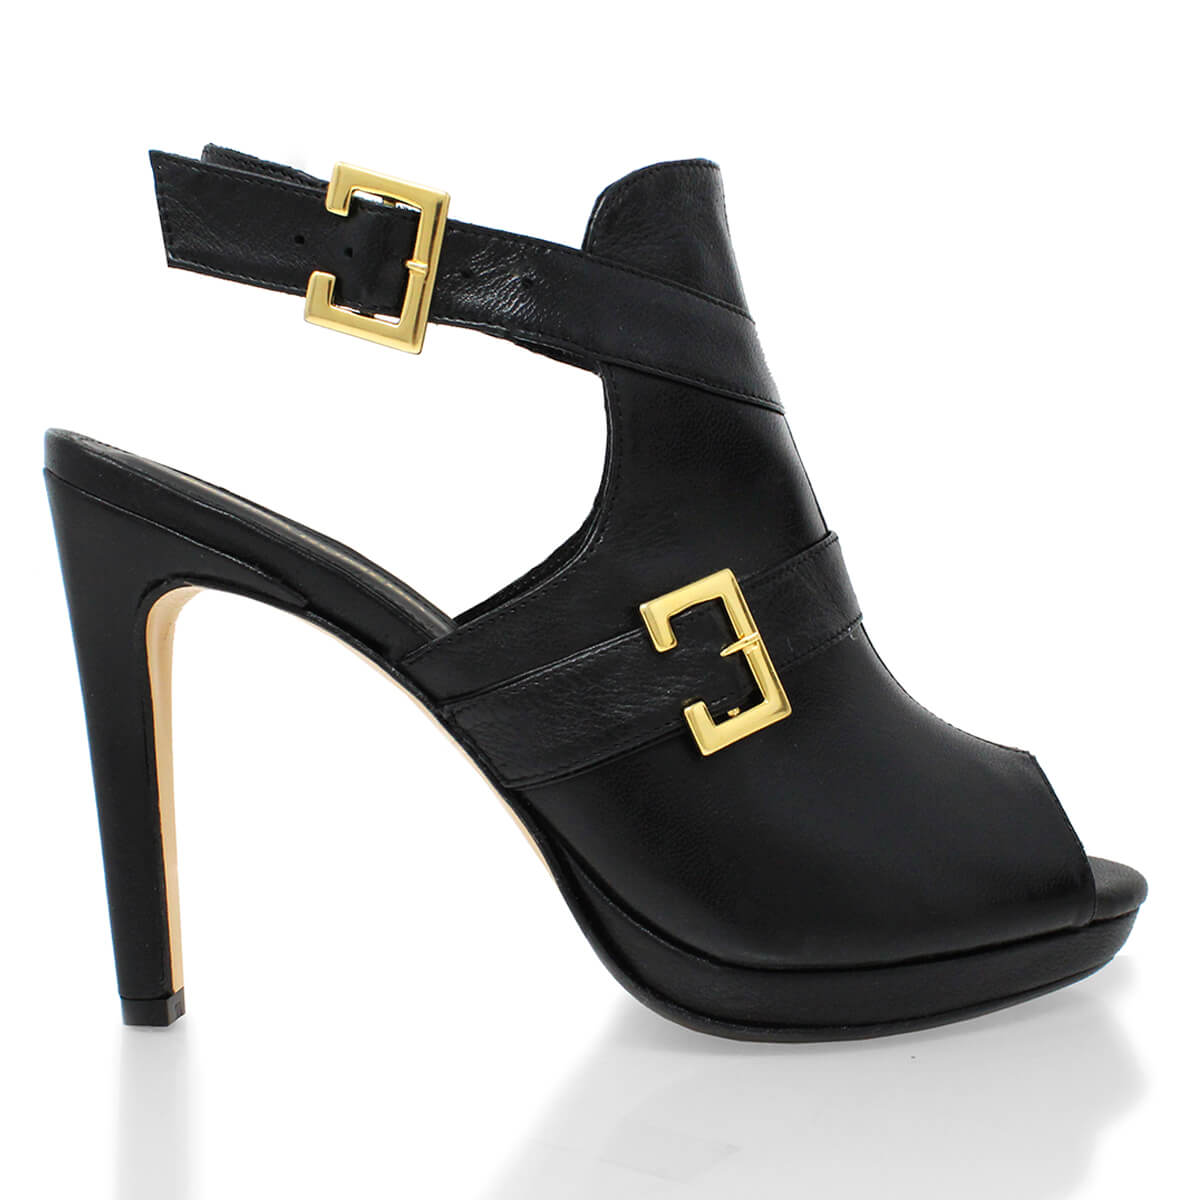 MARISA 105 - Black Regina Romero High Heel Ankle Boot Shoe for Women in Leather